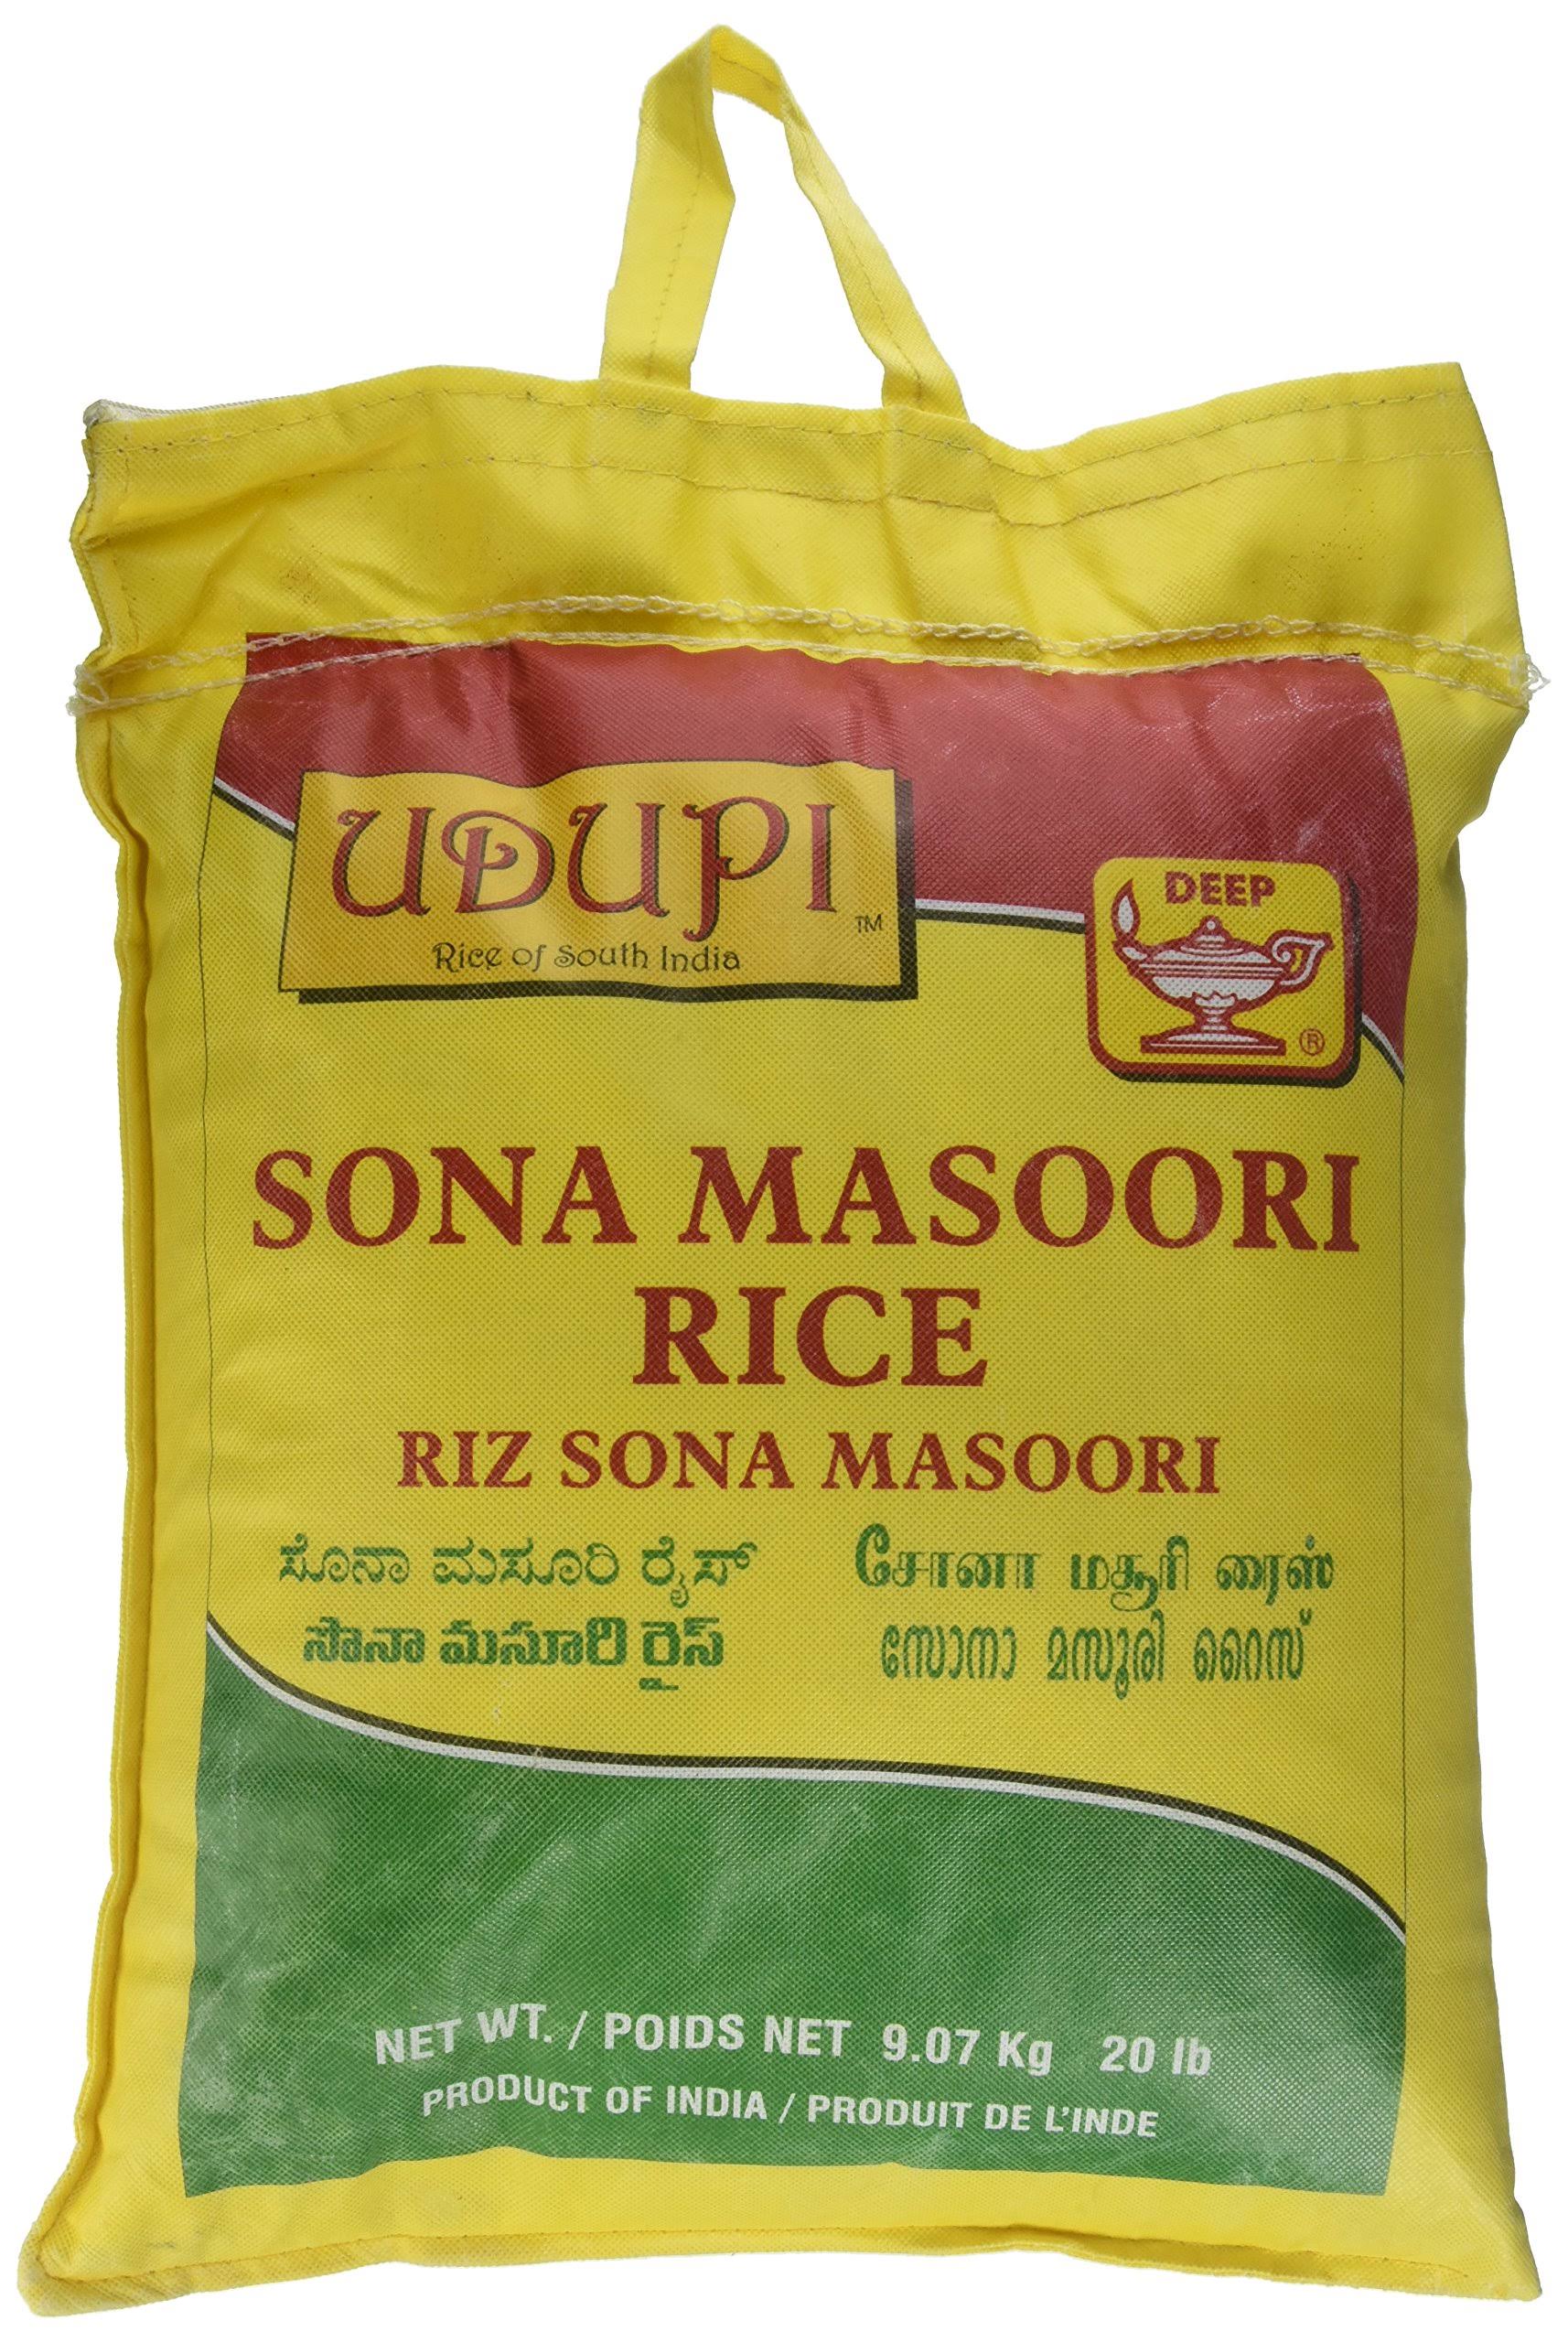 Udupi, Sona Masoori Rice, 20 Pound(LB)